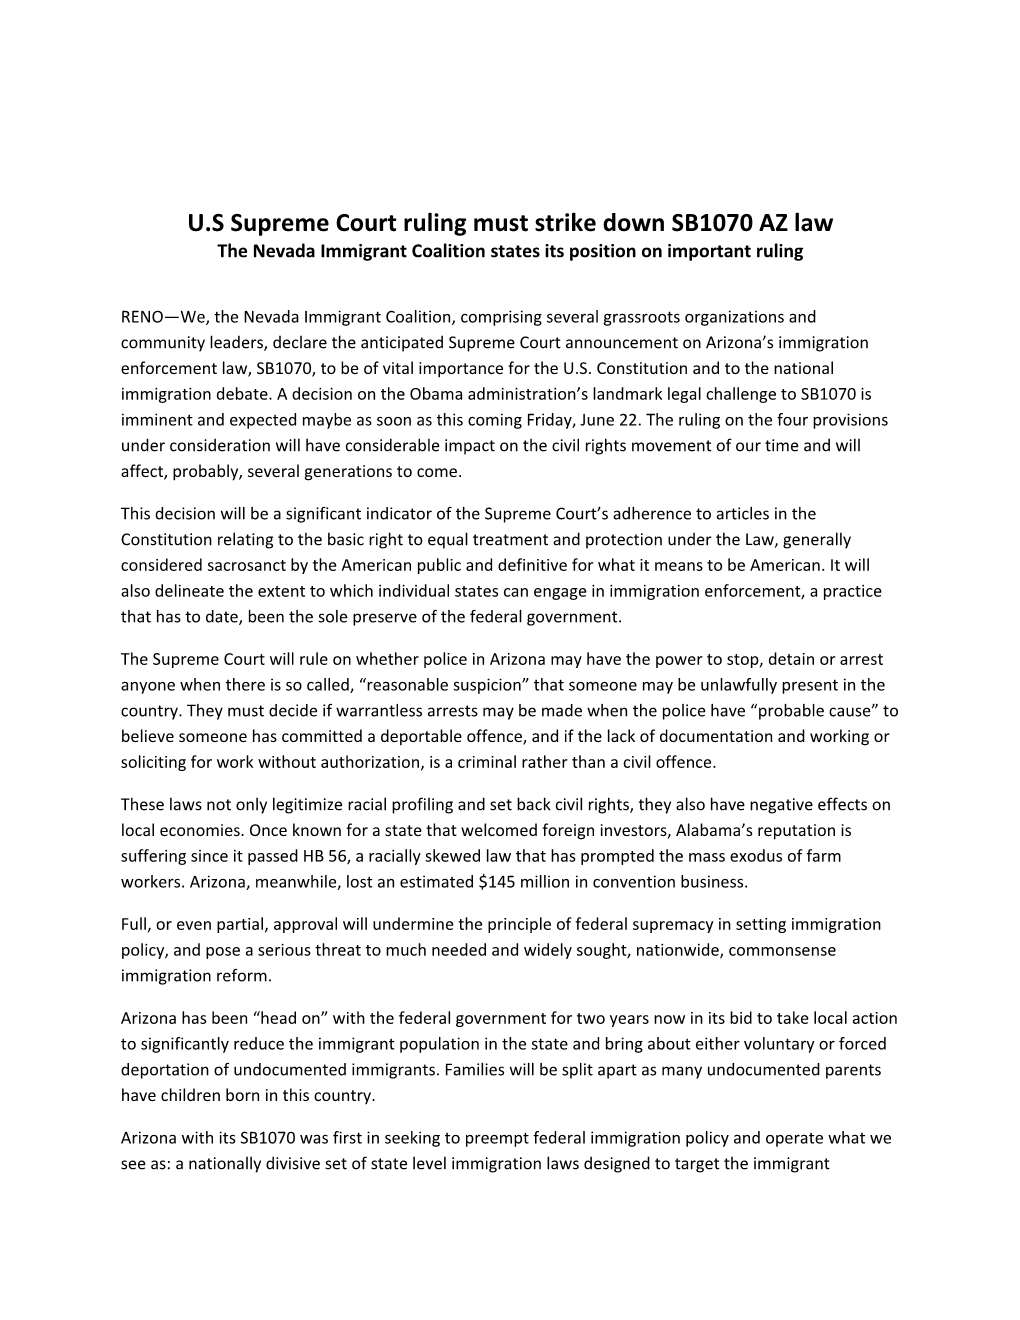 U.S Supreme Court Ruling Must Strike Down SB1070 AZ Law